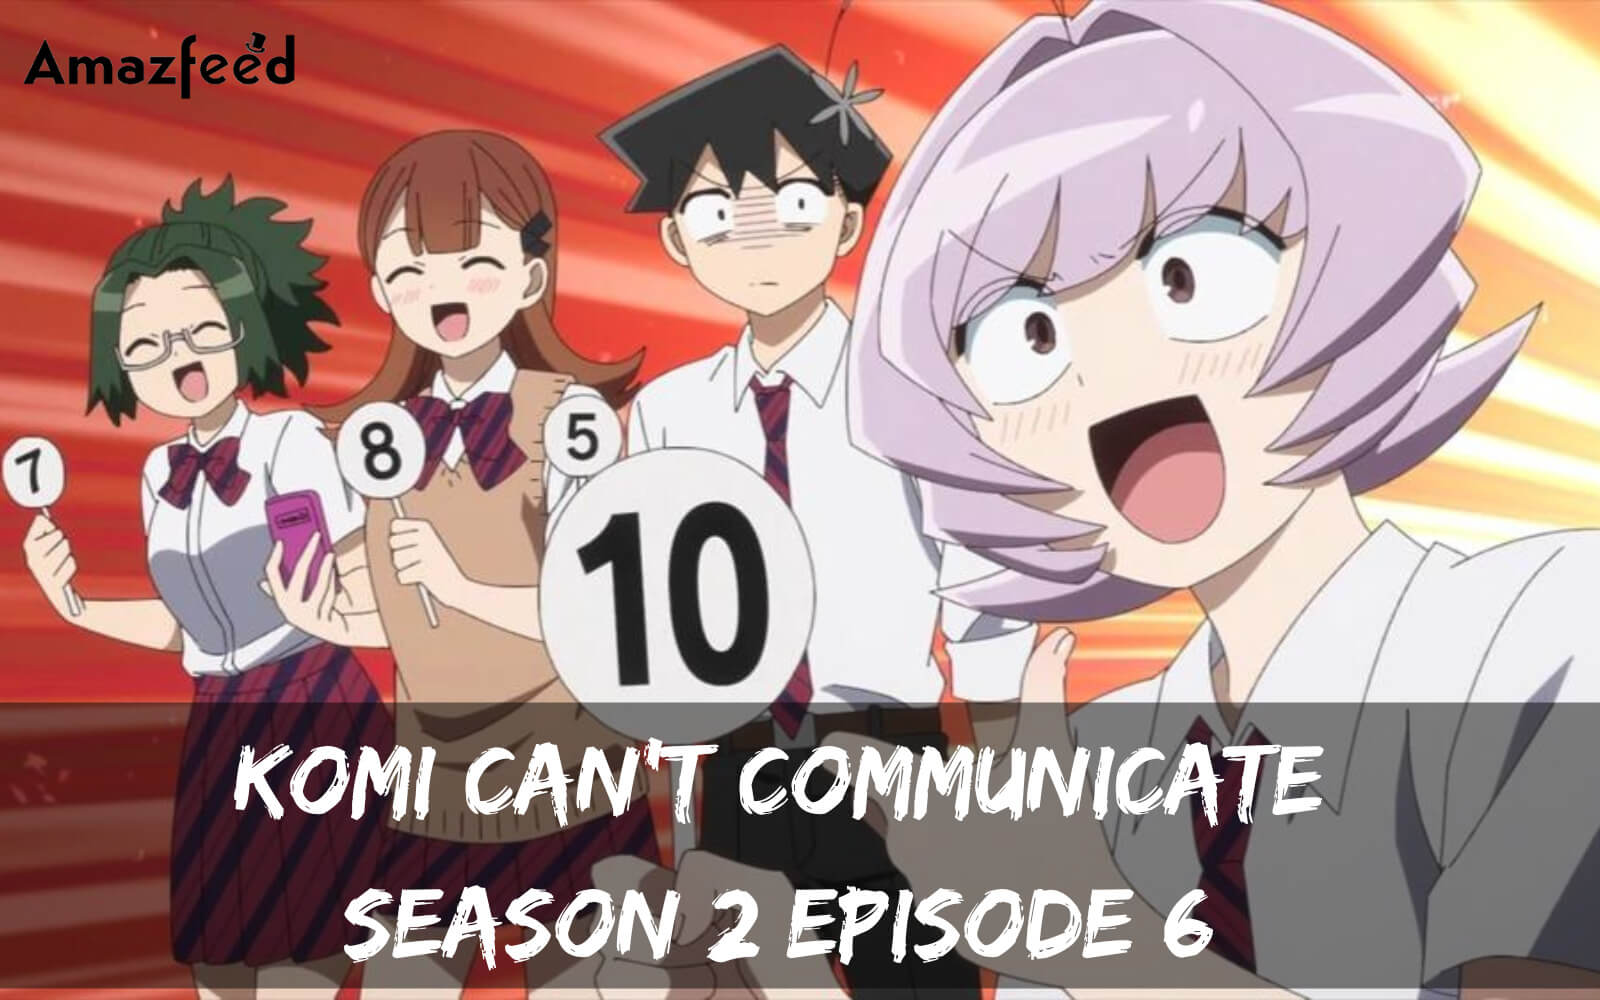 Komi Can’t Communicate Season 2 Episode 6 release date